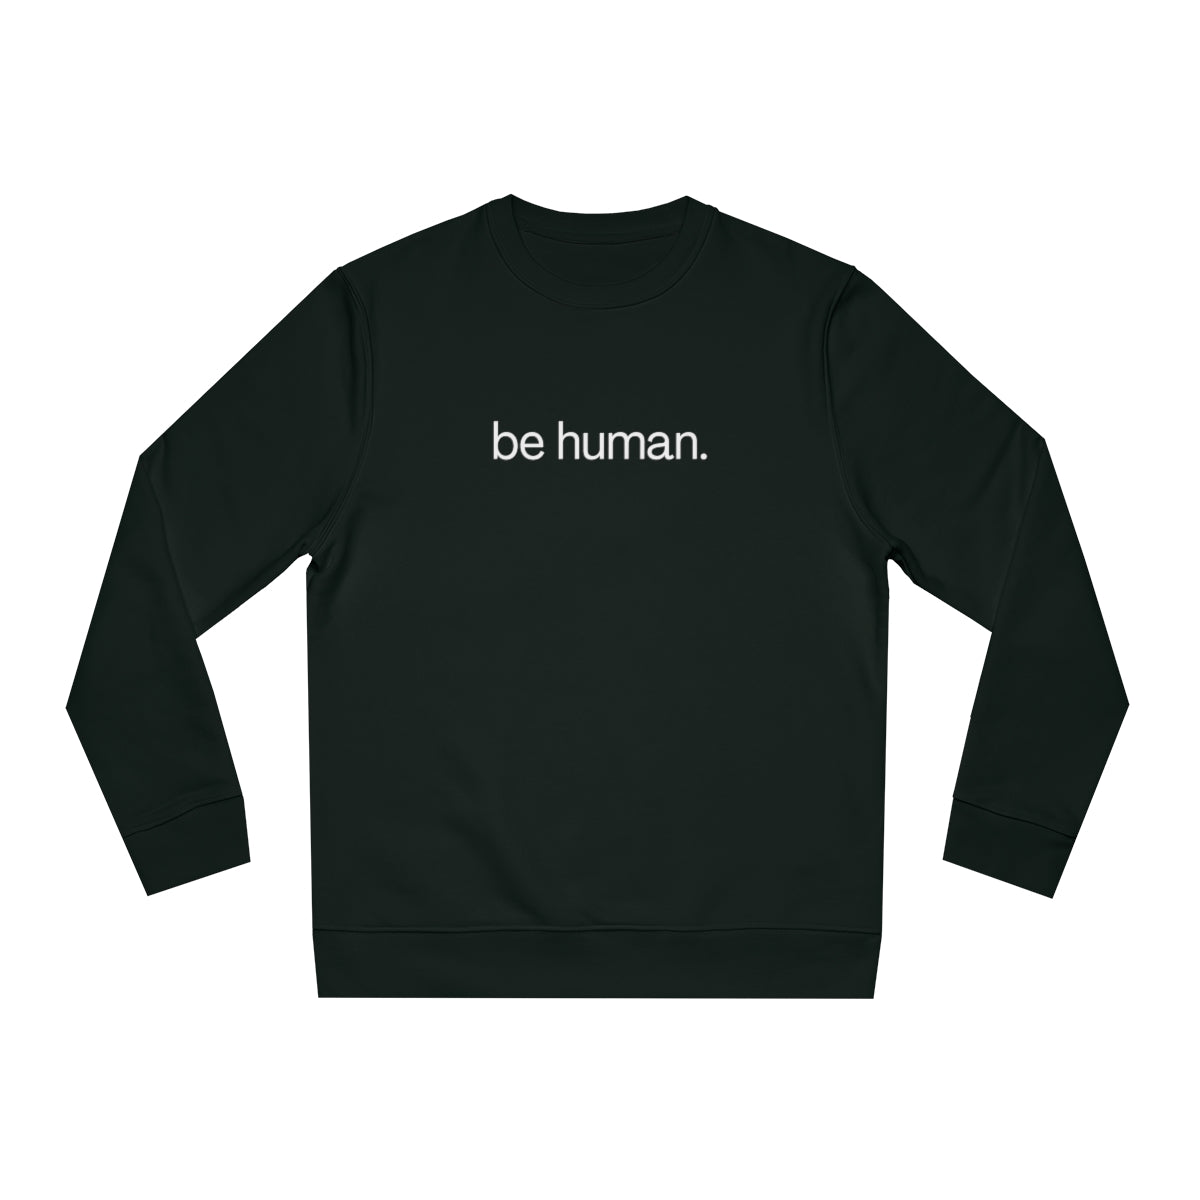 be human. - Unisex Crewneck